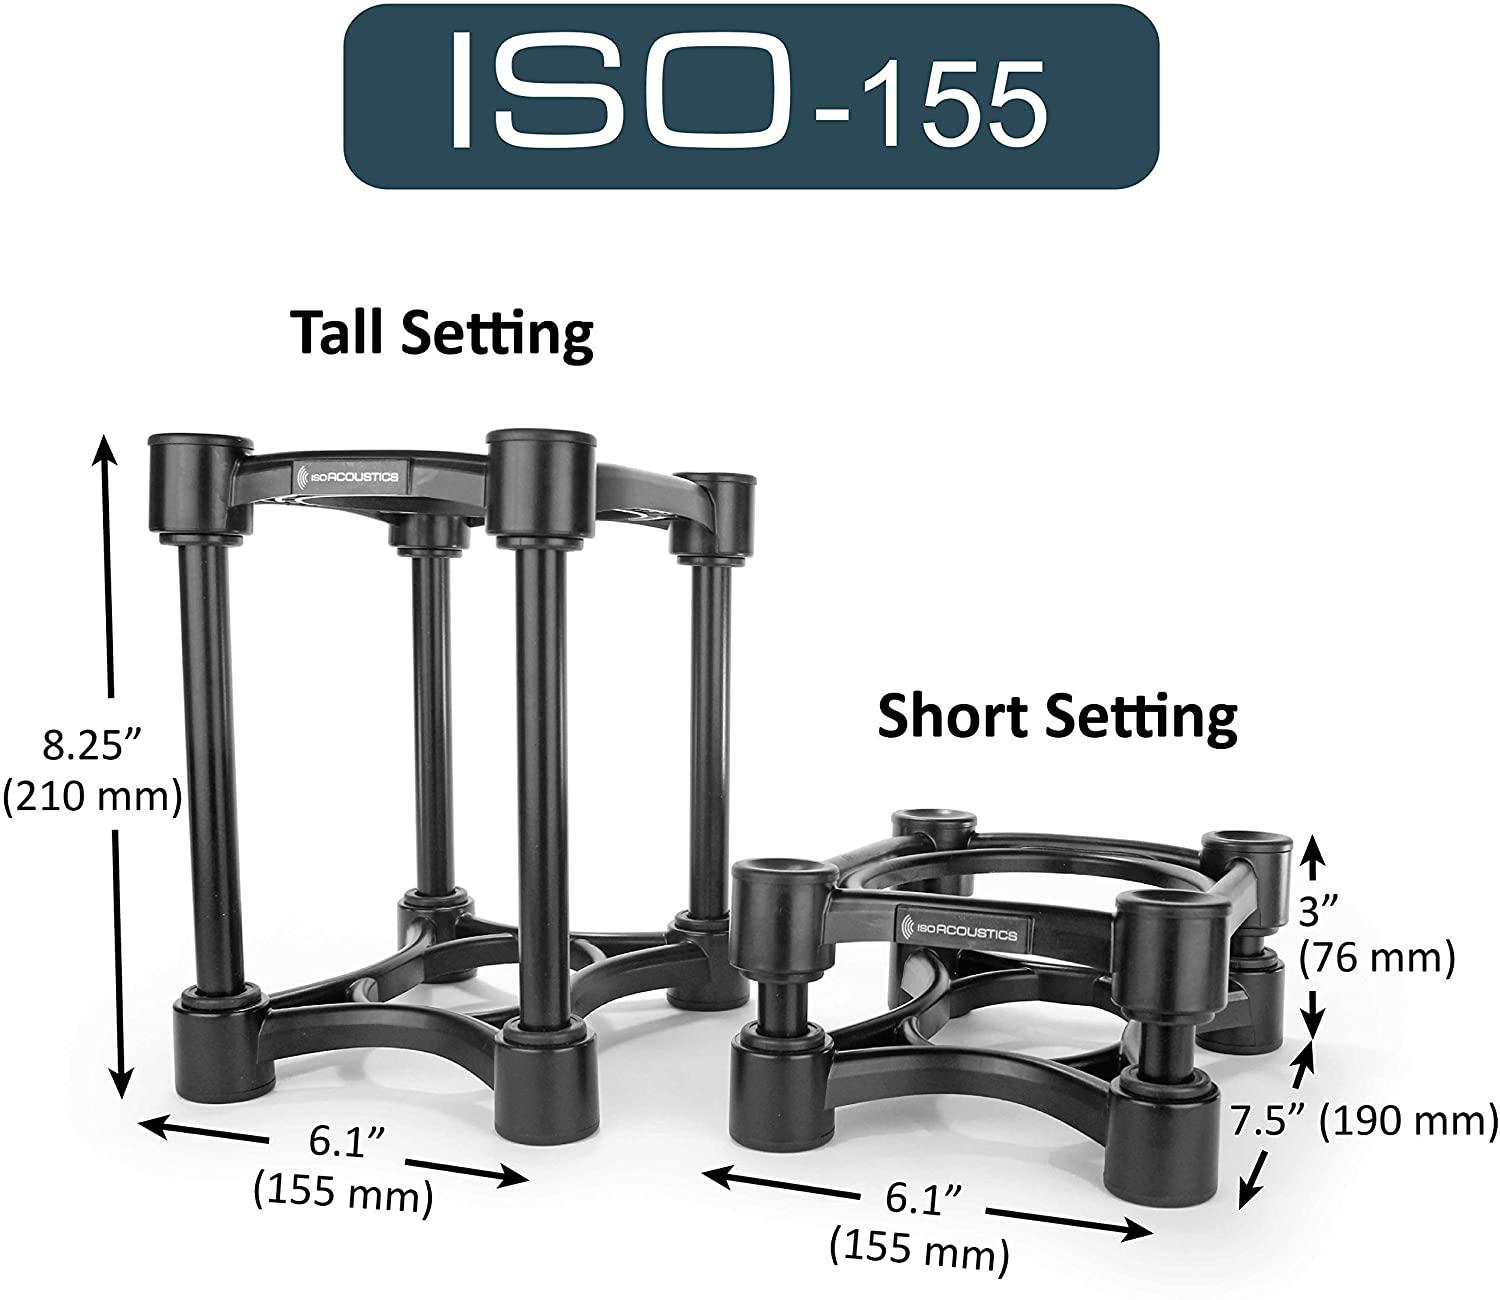 ISO Acoustics - Bases para Monitores de Estudio Mod.ISO-155_2